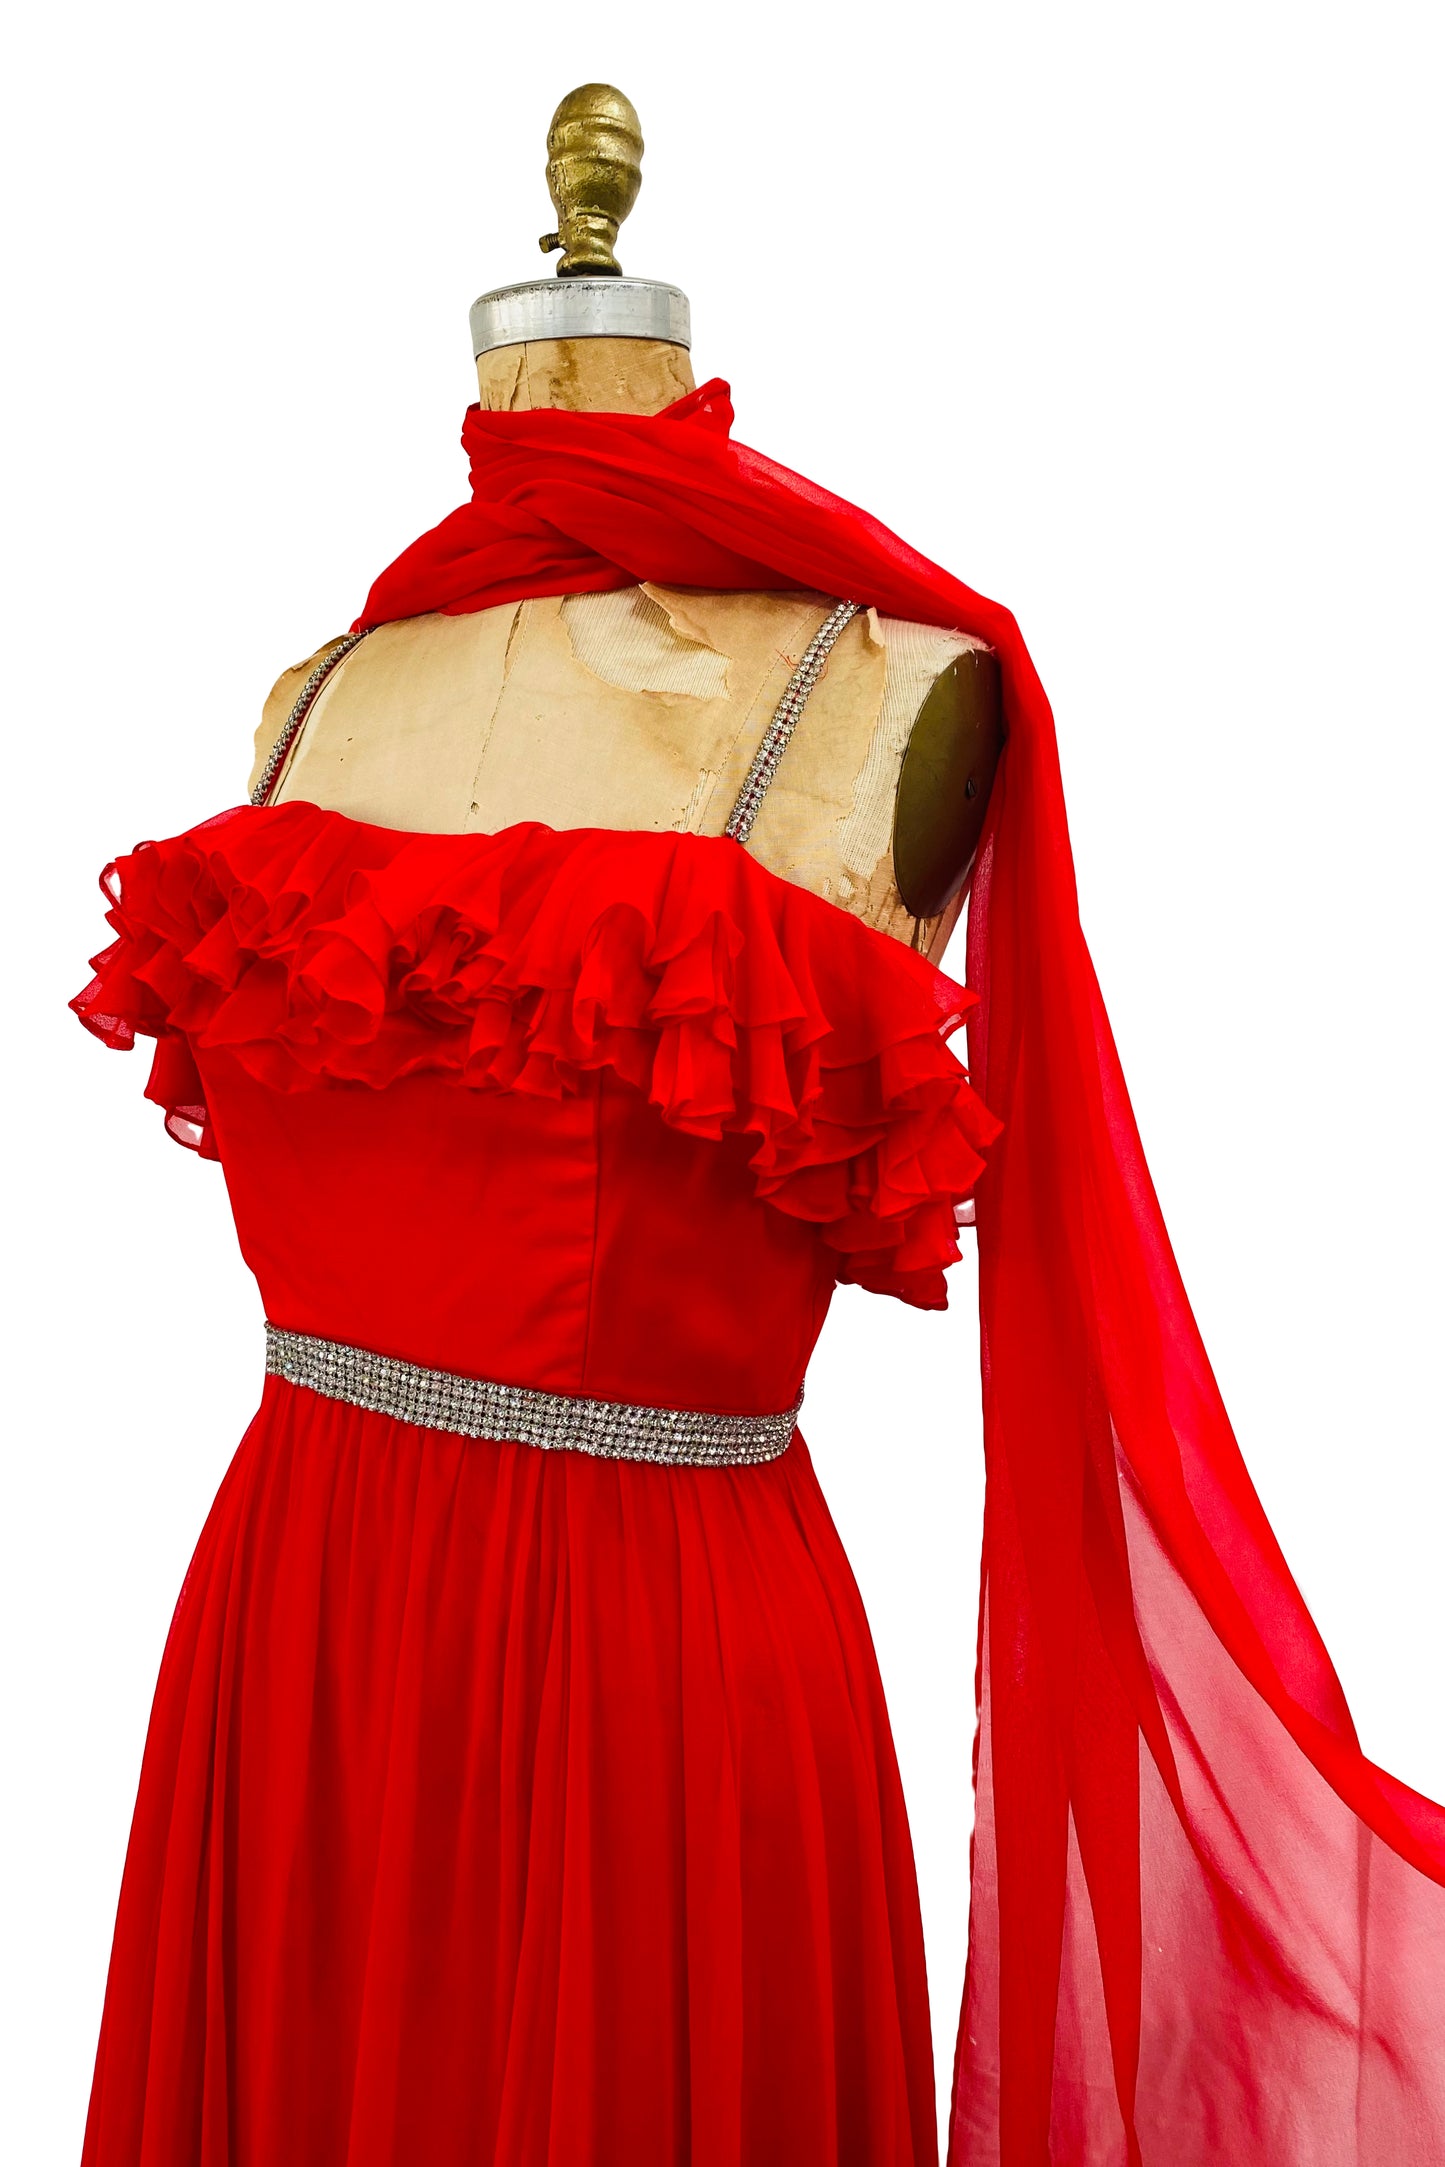 Stunning Old Hollywood 1960s Emma Domb Red Chiffon & Rhinestone Dress